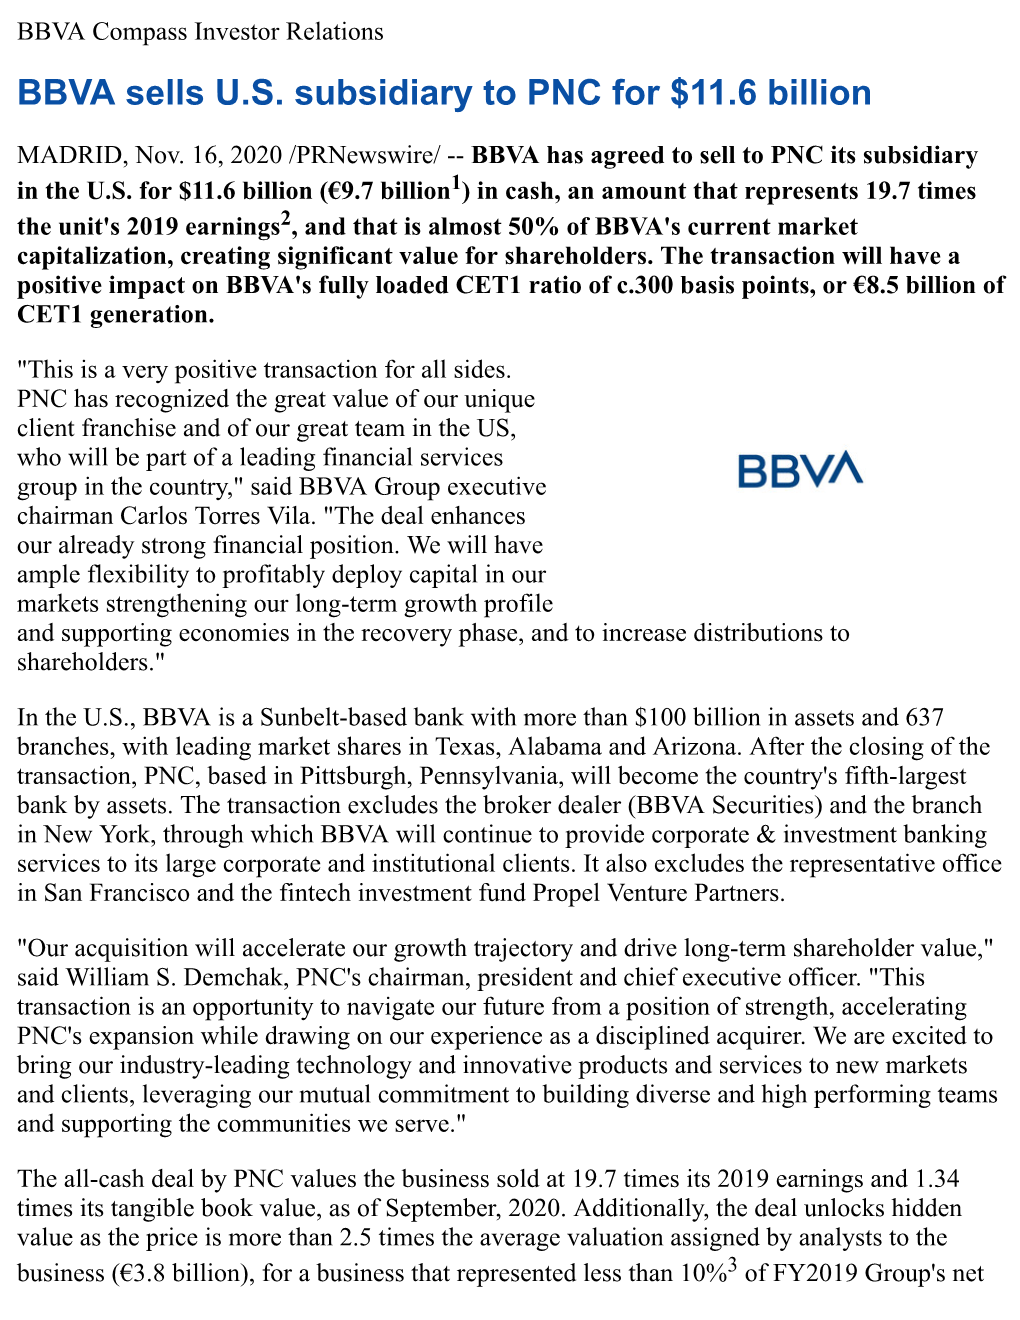 BBVA Sells U.S. Subsidiary to PNC for $11.6 Billion